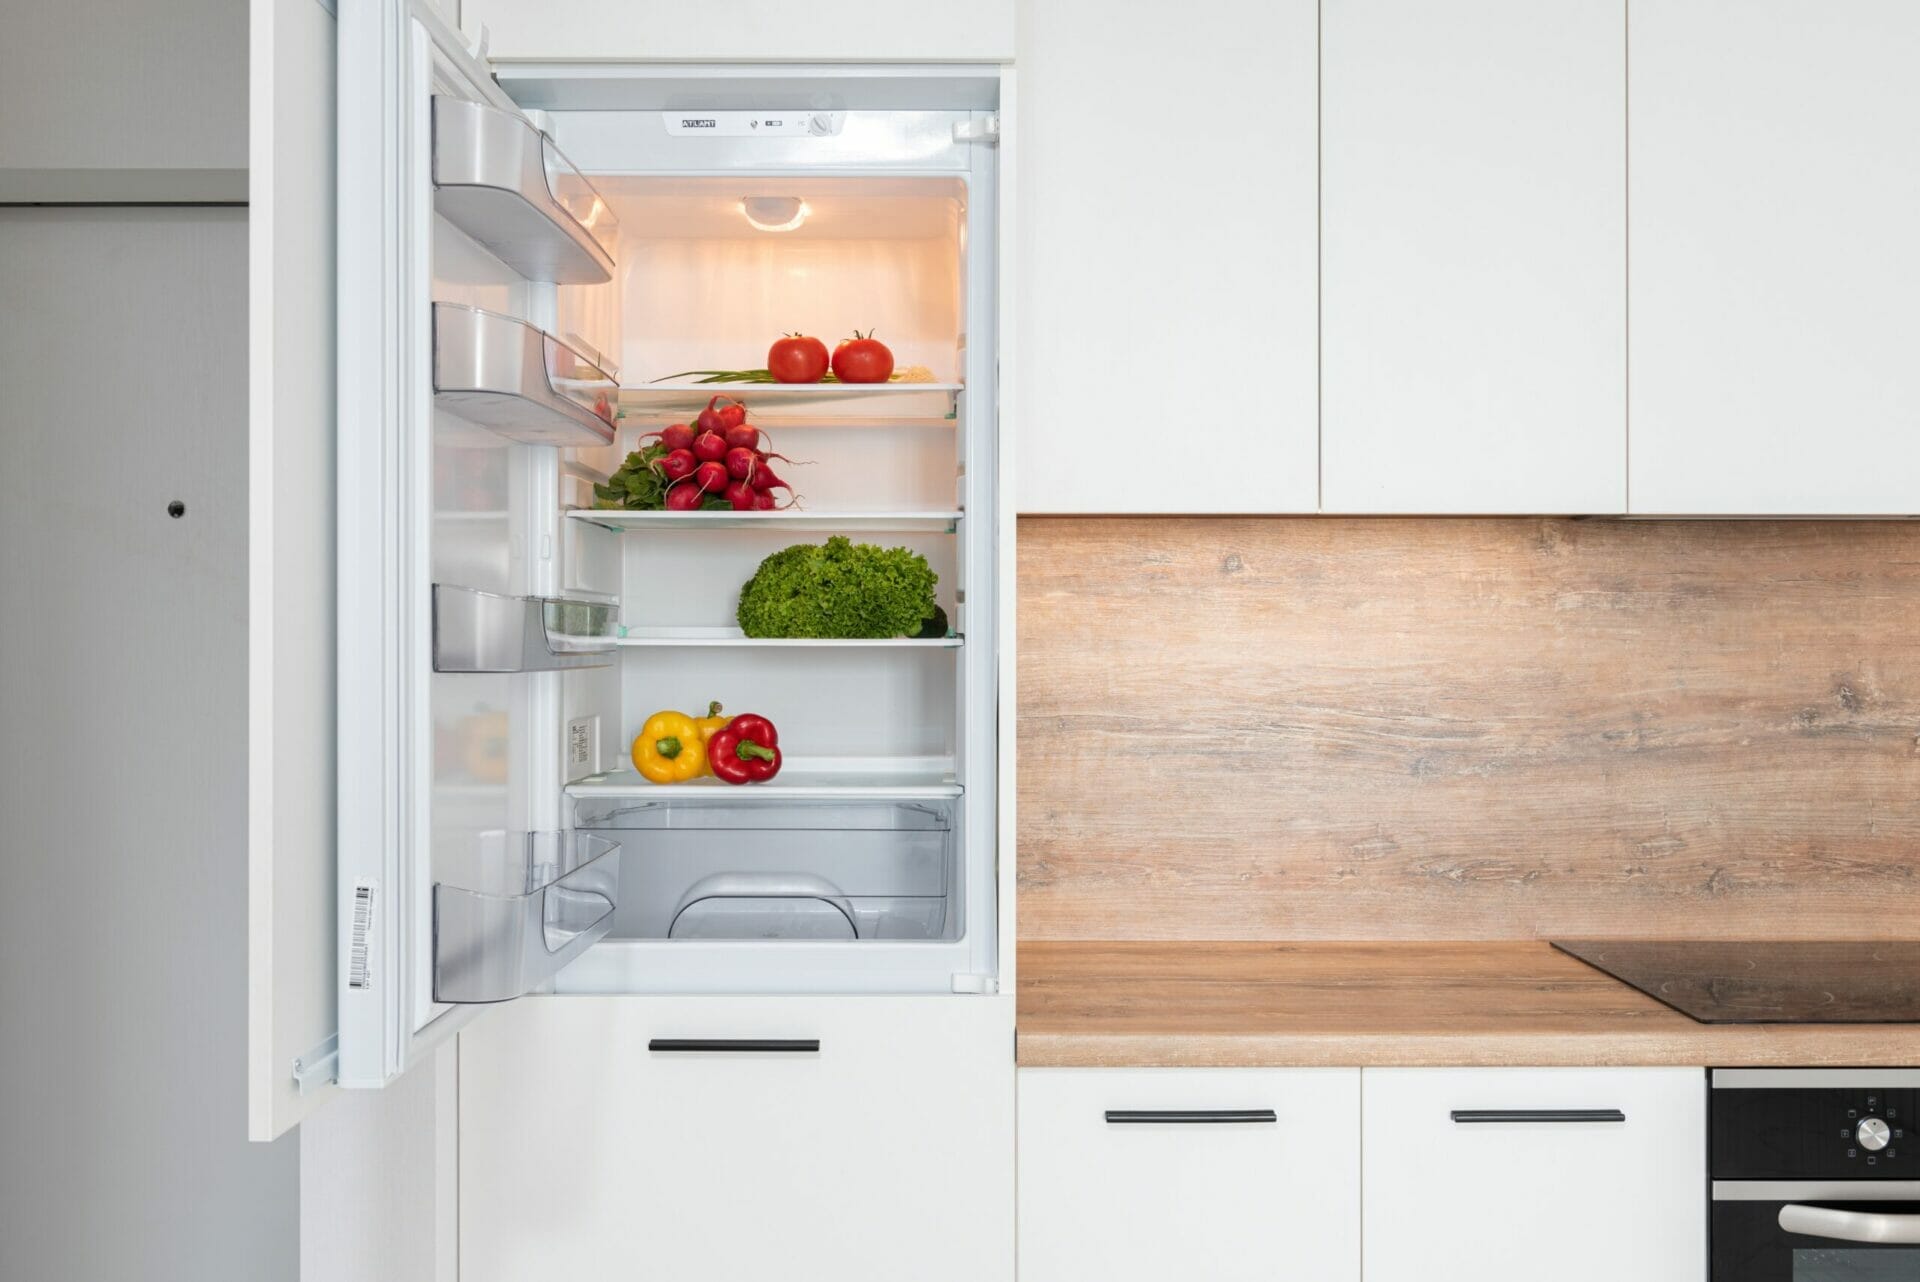 Kitchen view with fridge door open, various fresh fruit & veg inside fridge